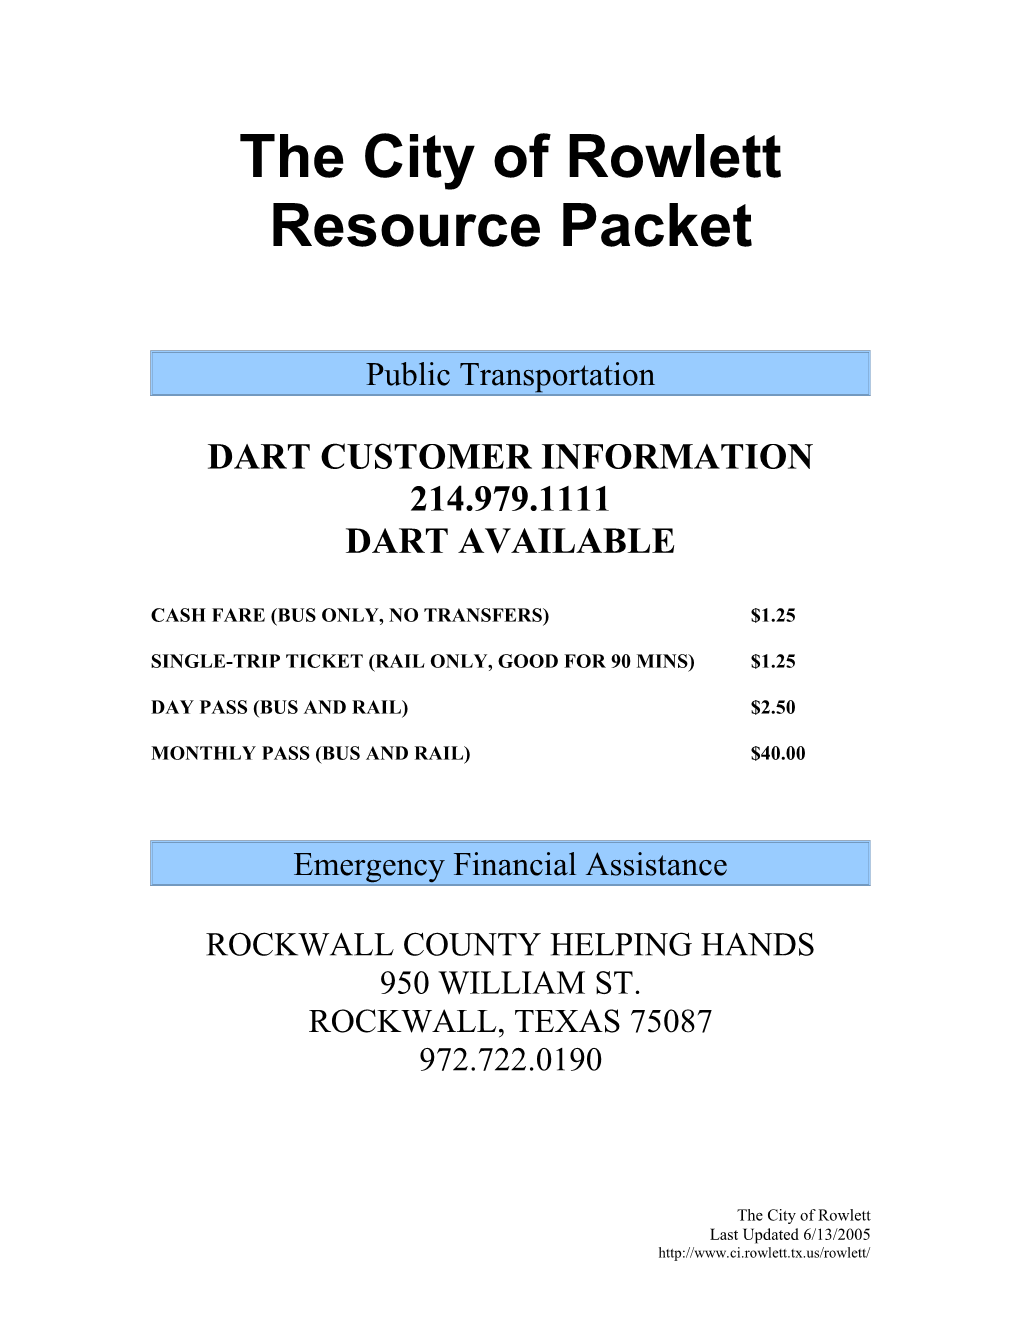 The City of Rowlett Resource Packet